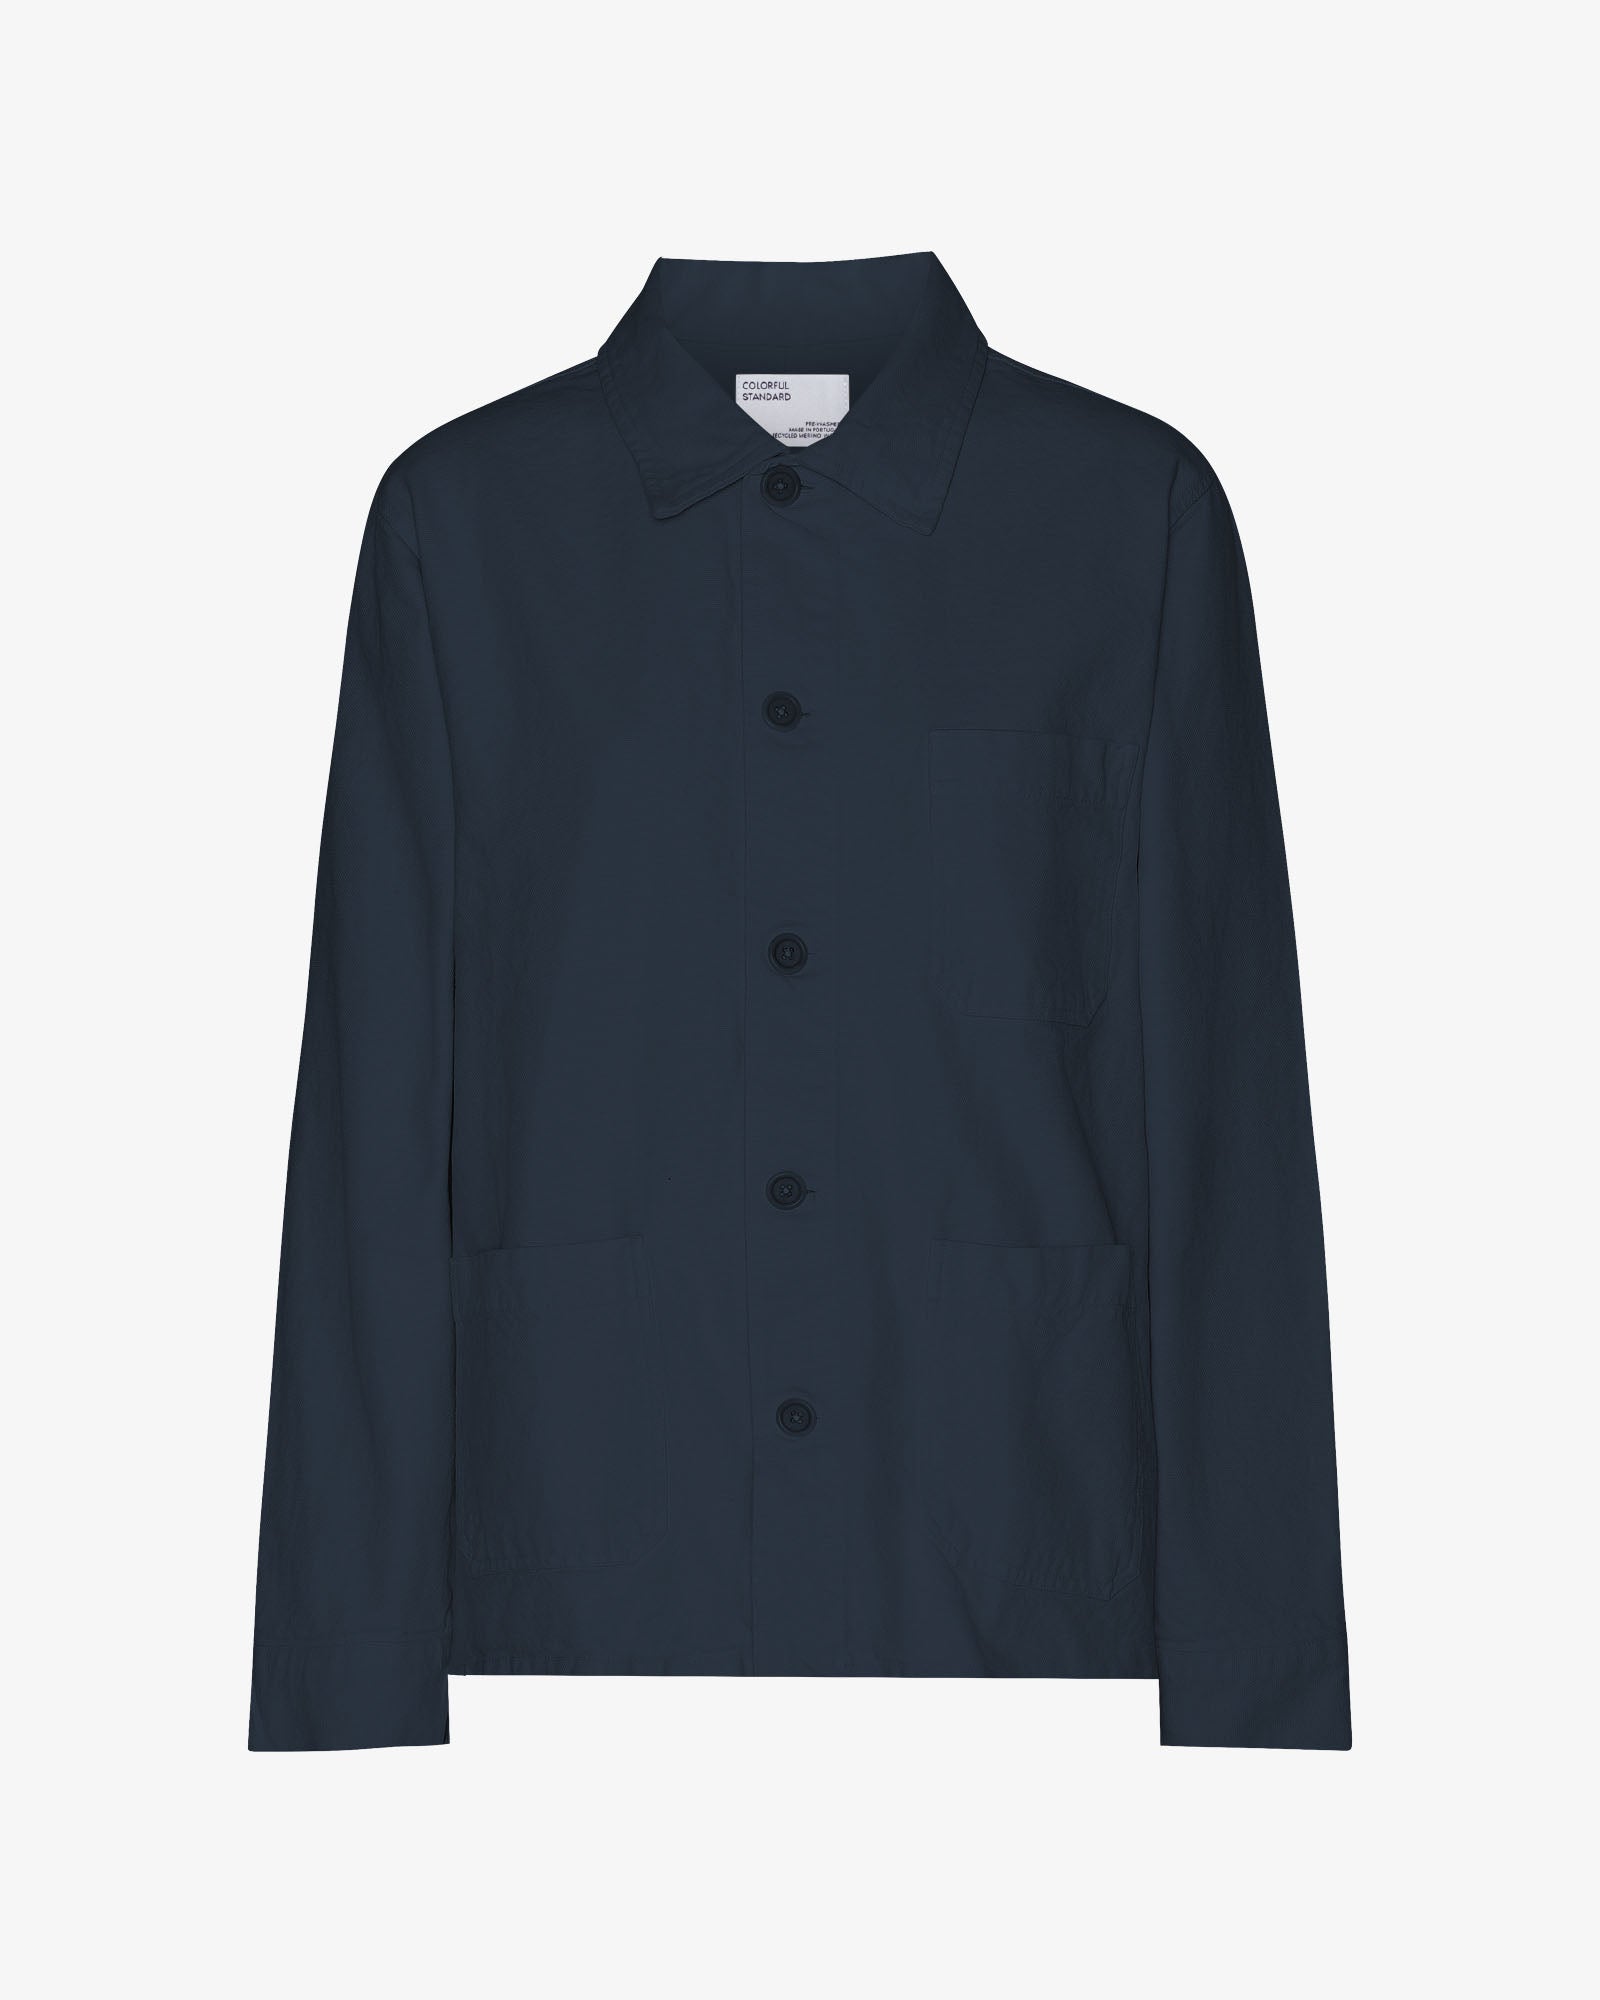 Organic Workwear Jacket - Navy Blue